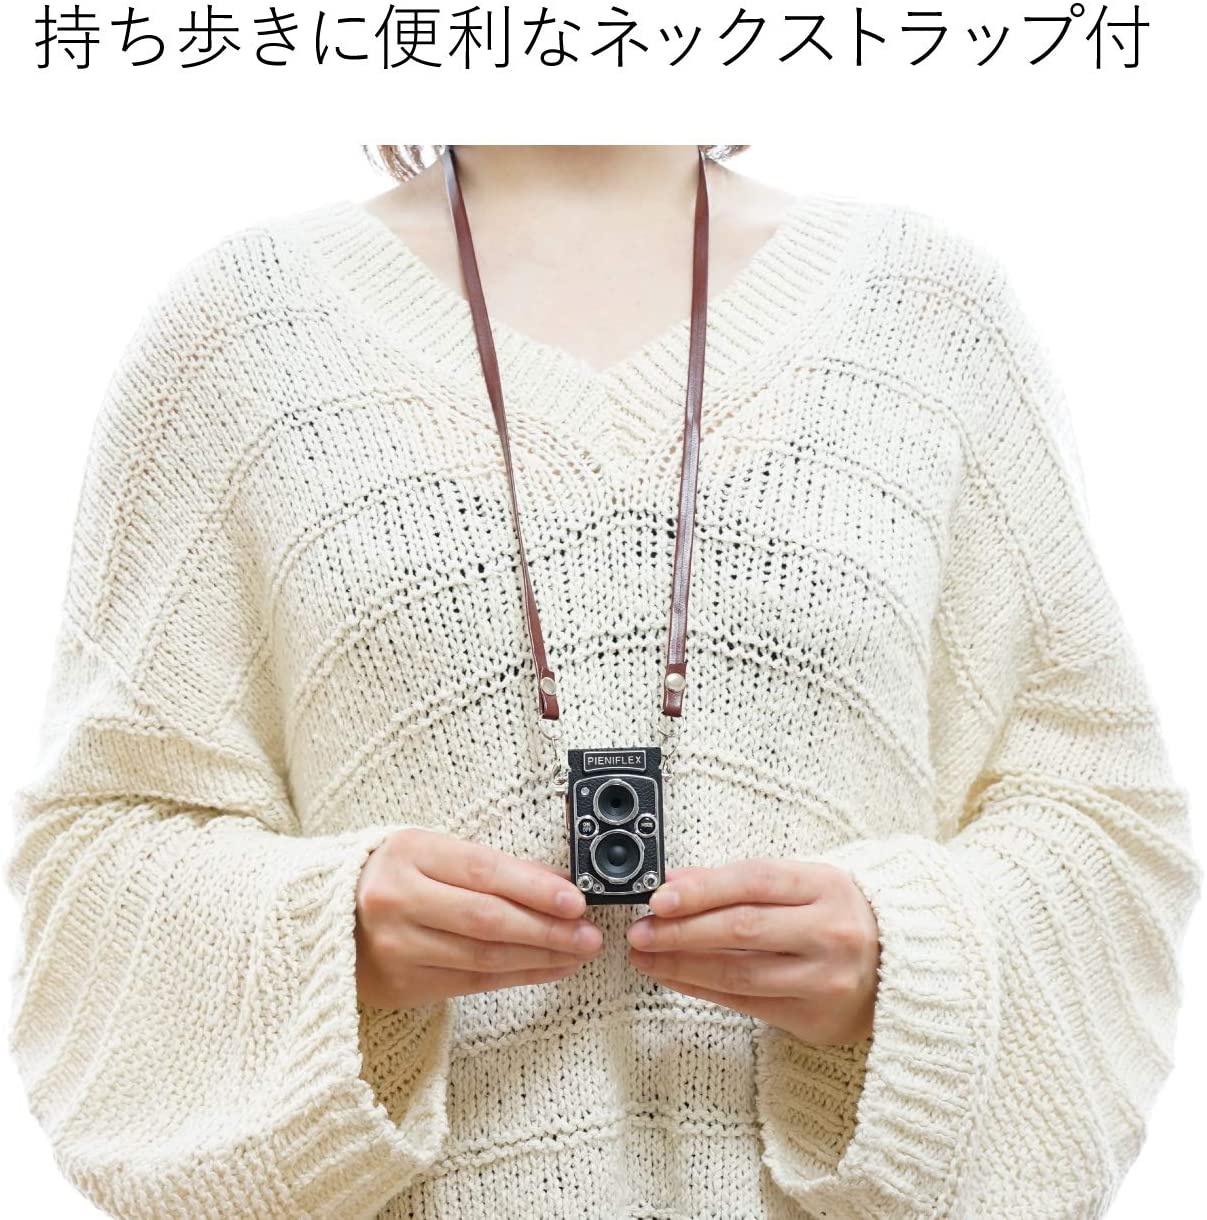 Kenko Tokina(ケンコー・トキナー) トイカメラ PIENIFLEX KC-TY02の商品画像4 